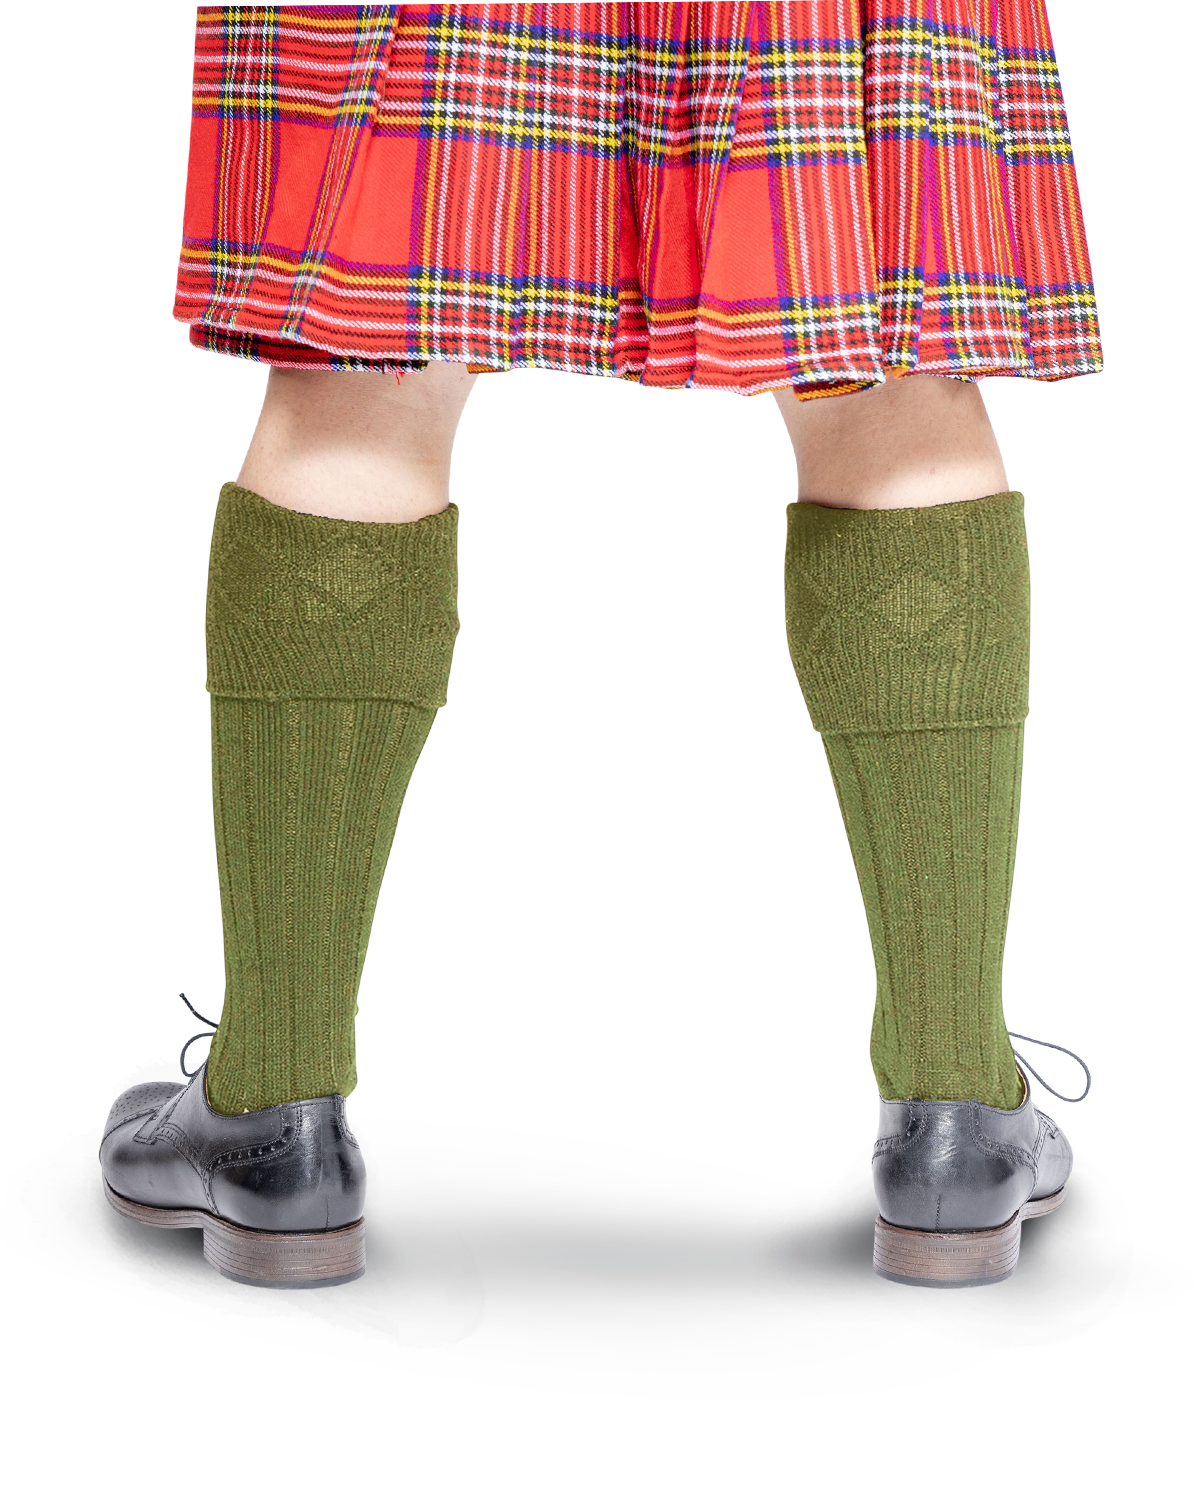 Scottish Kilt Hose - Military Green Cover